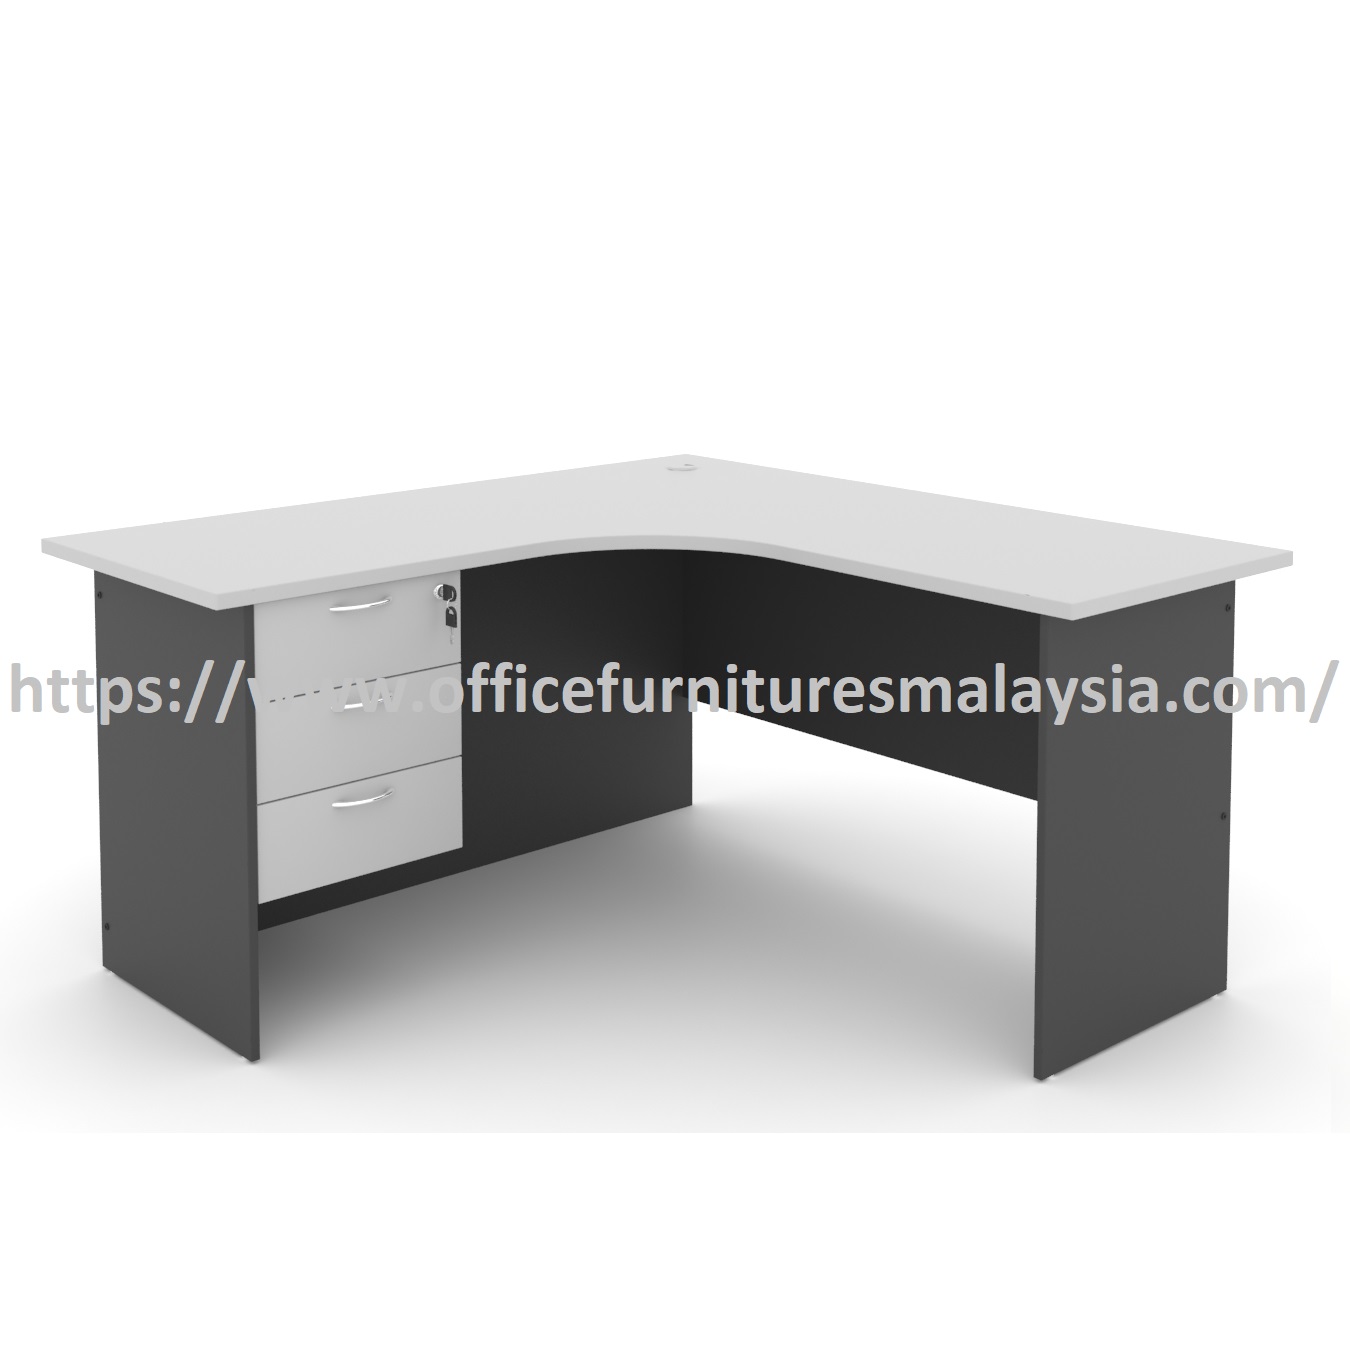 6ft Modern Design L Shaped Corner Desk With 3 Drawers Meja Tulis Pejabat Berbentuk L Shaped Online Shop Malaysia